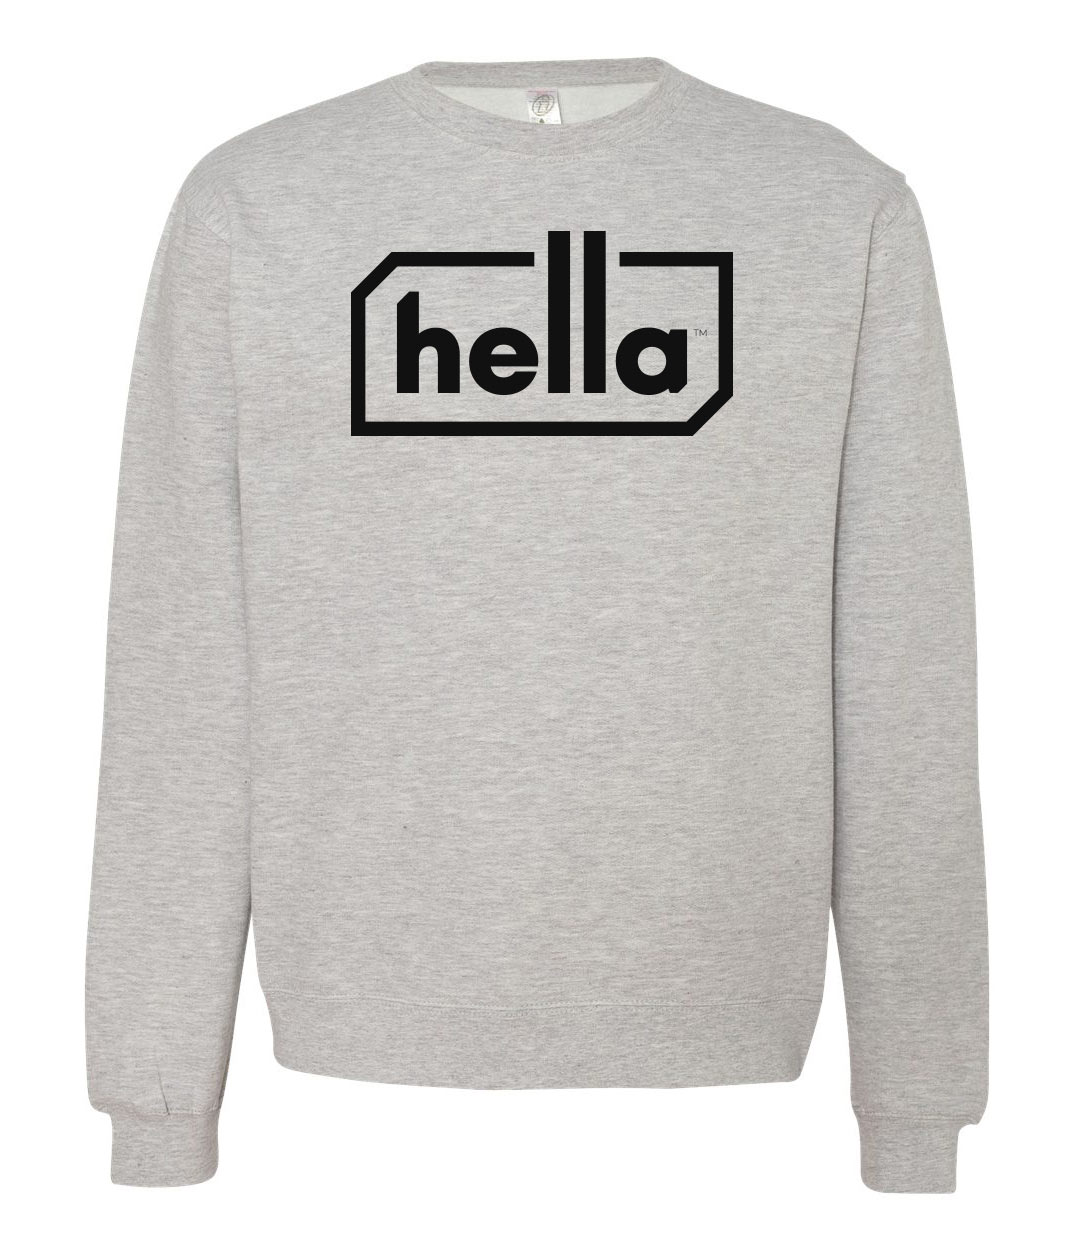 Hella Crewneck Sweatshirt